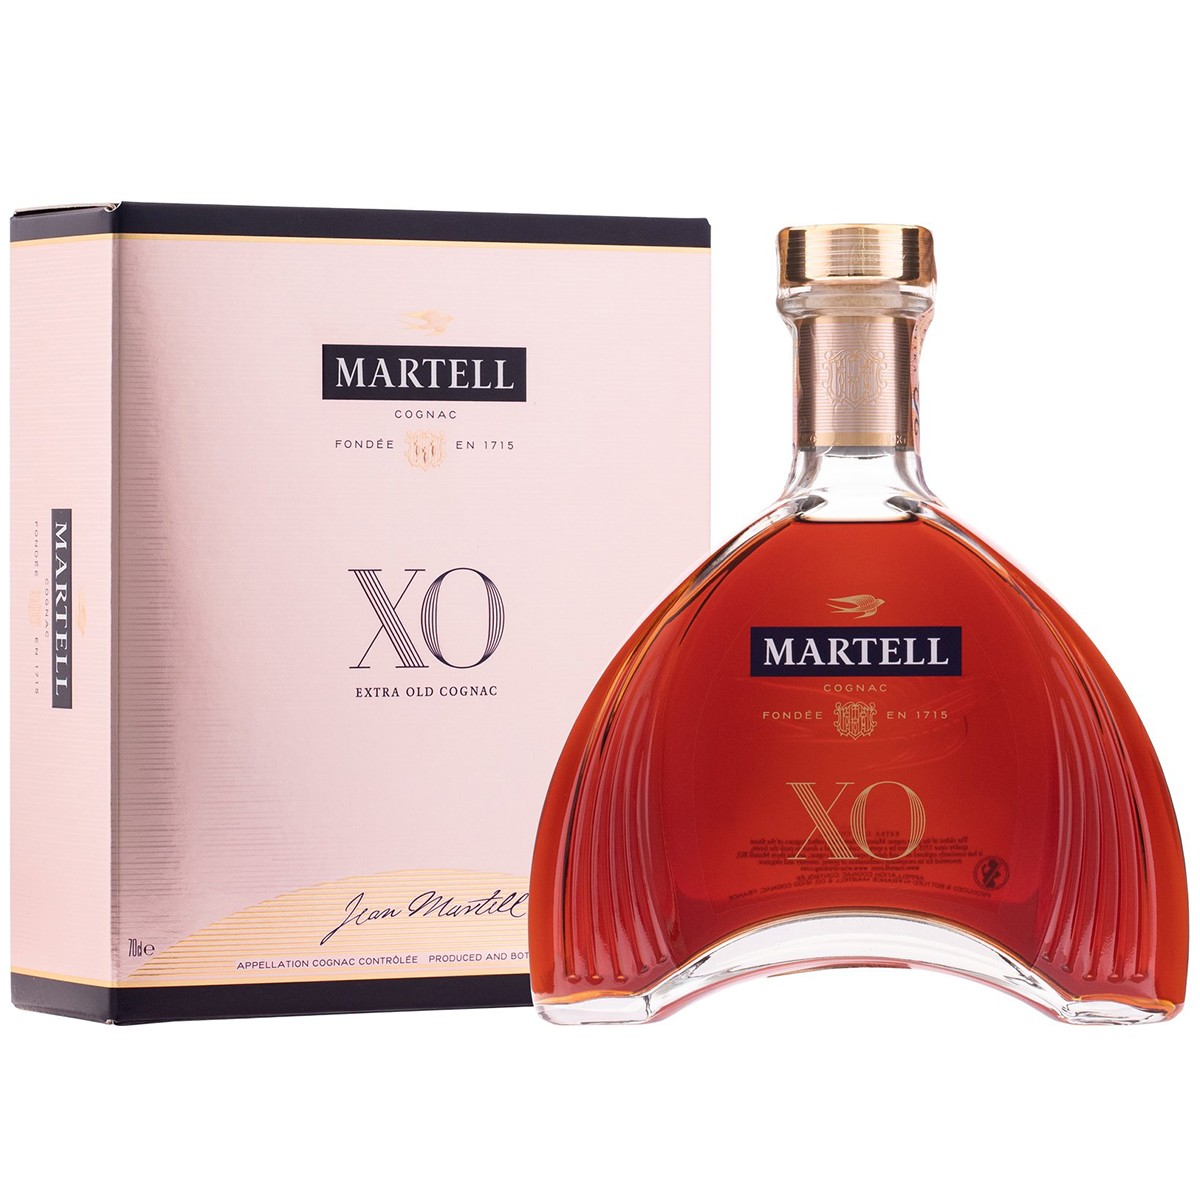 Martell X.O. 40% 0,7l (karton)